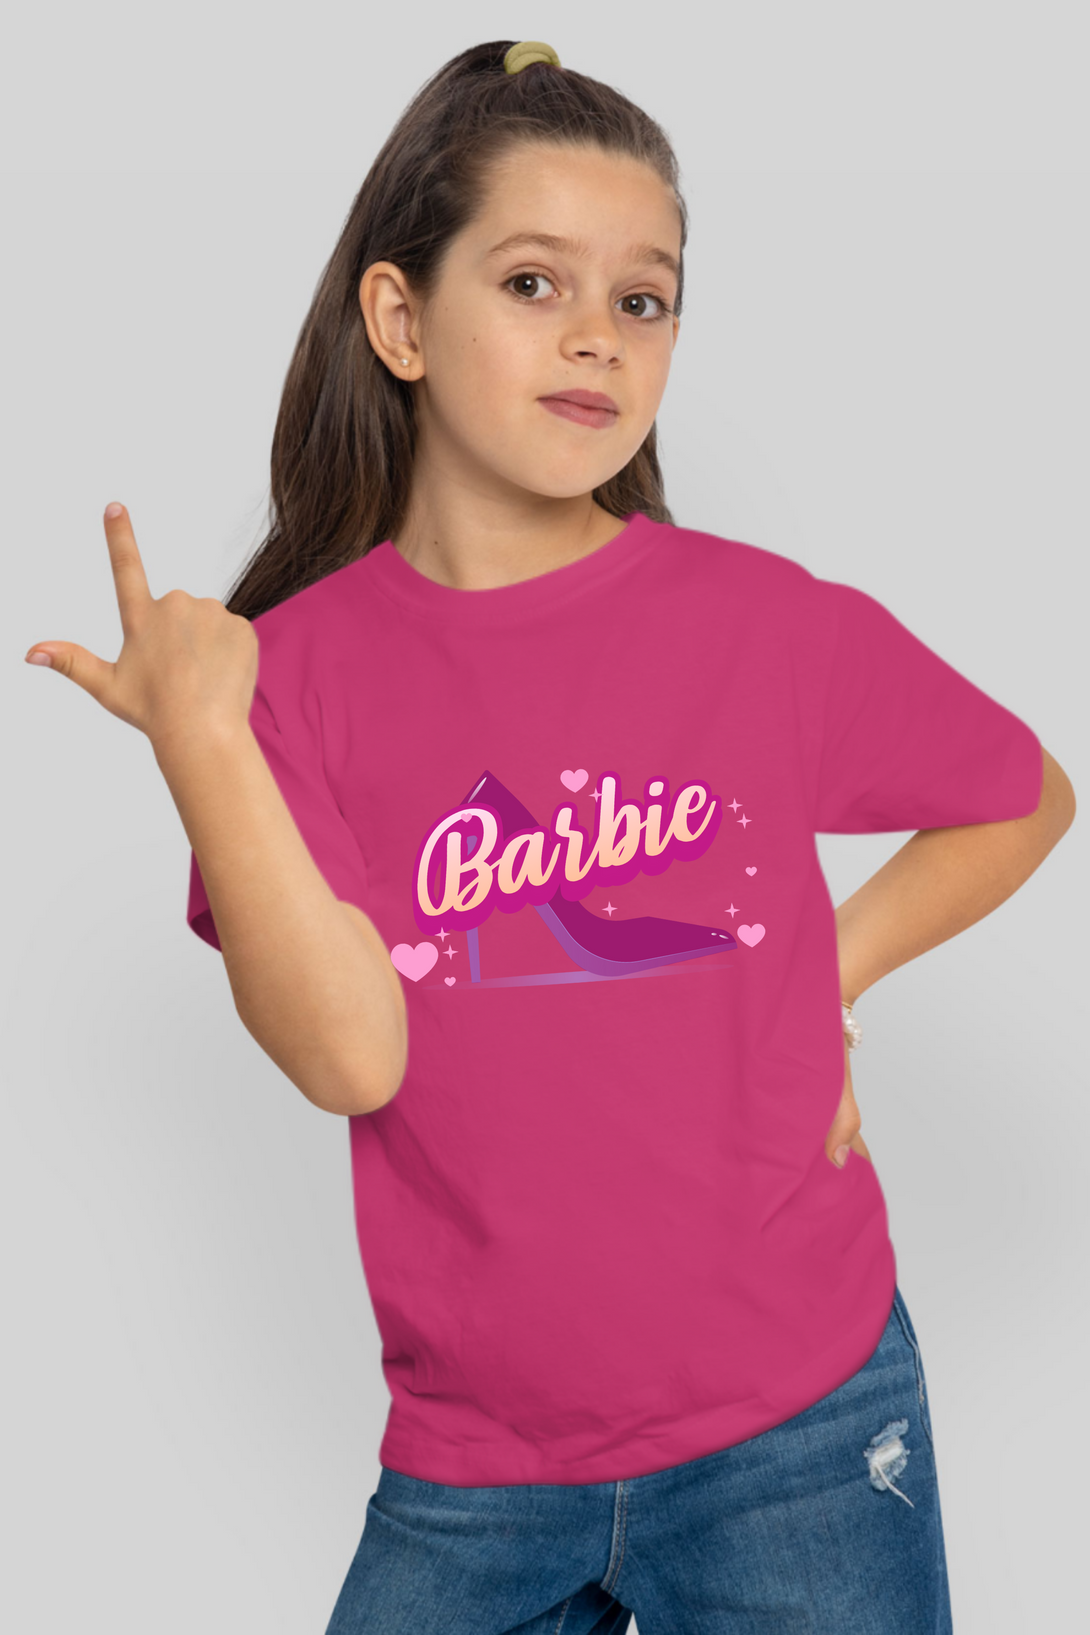 Barbie Printed T-Shirt For Girl - WowWaves - 7